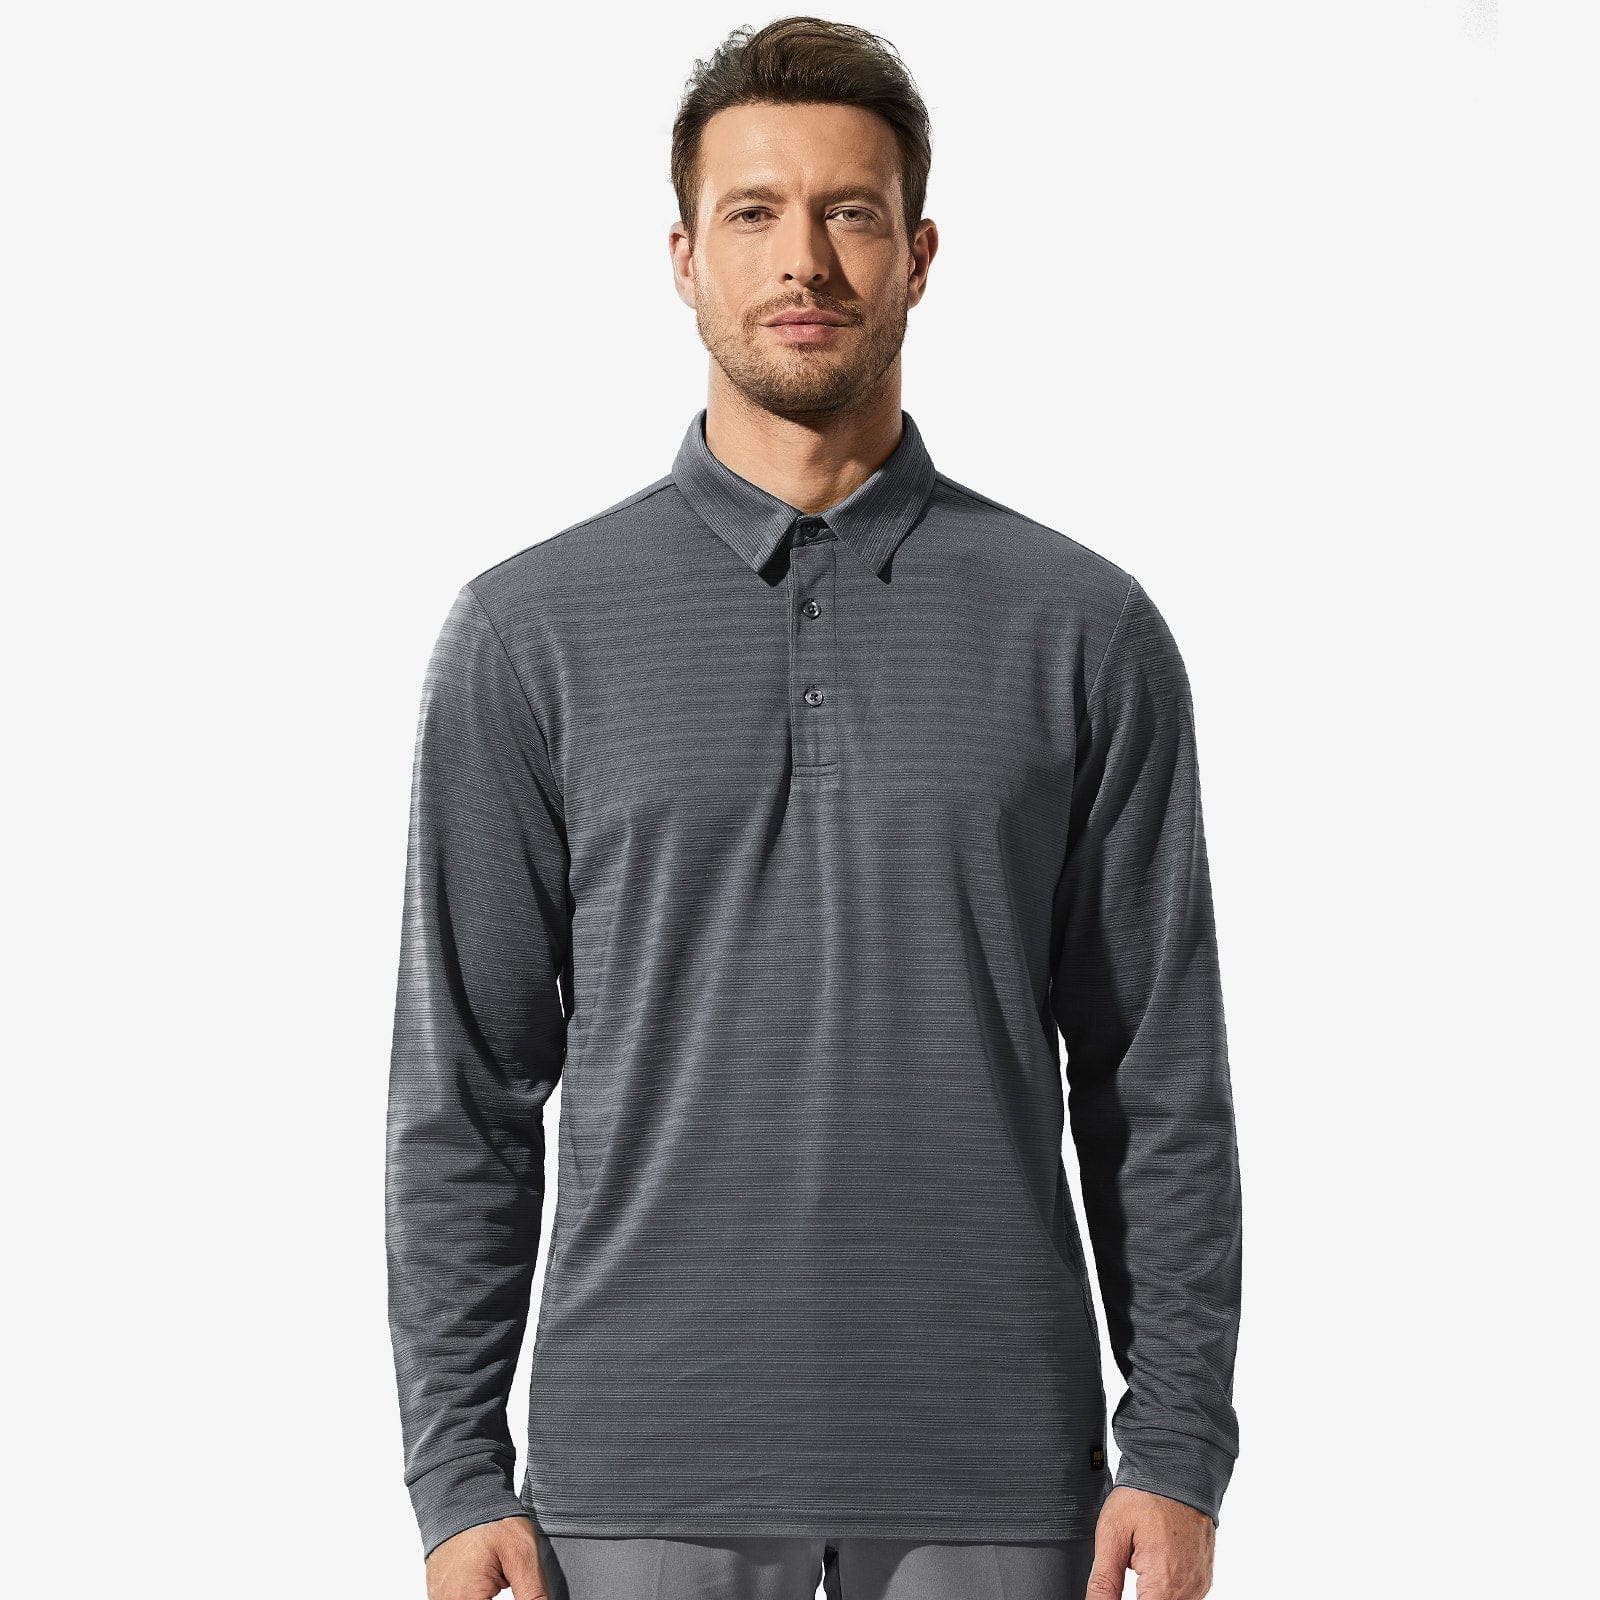 Men's Long Sleeve Polo Shirts Striped Quick Dry Golf Shirts, Dark Grey / S